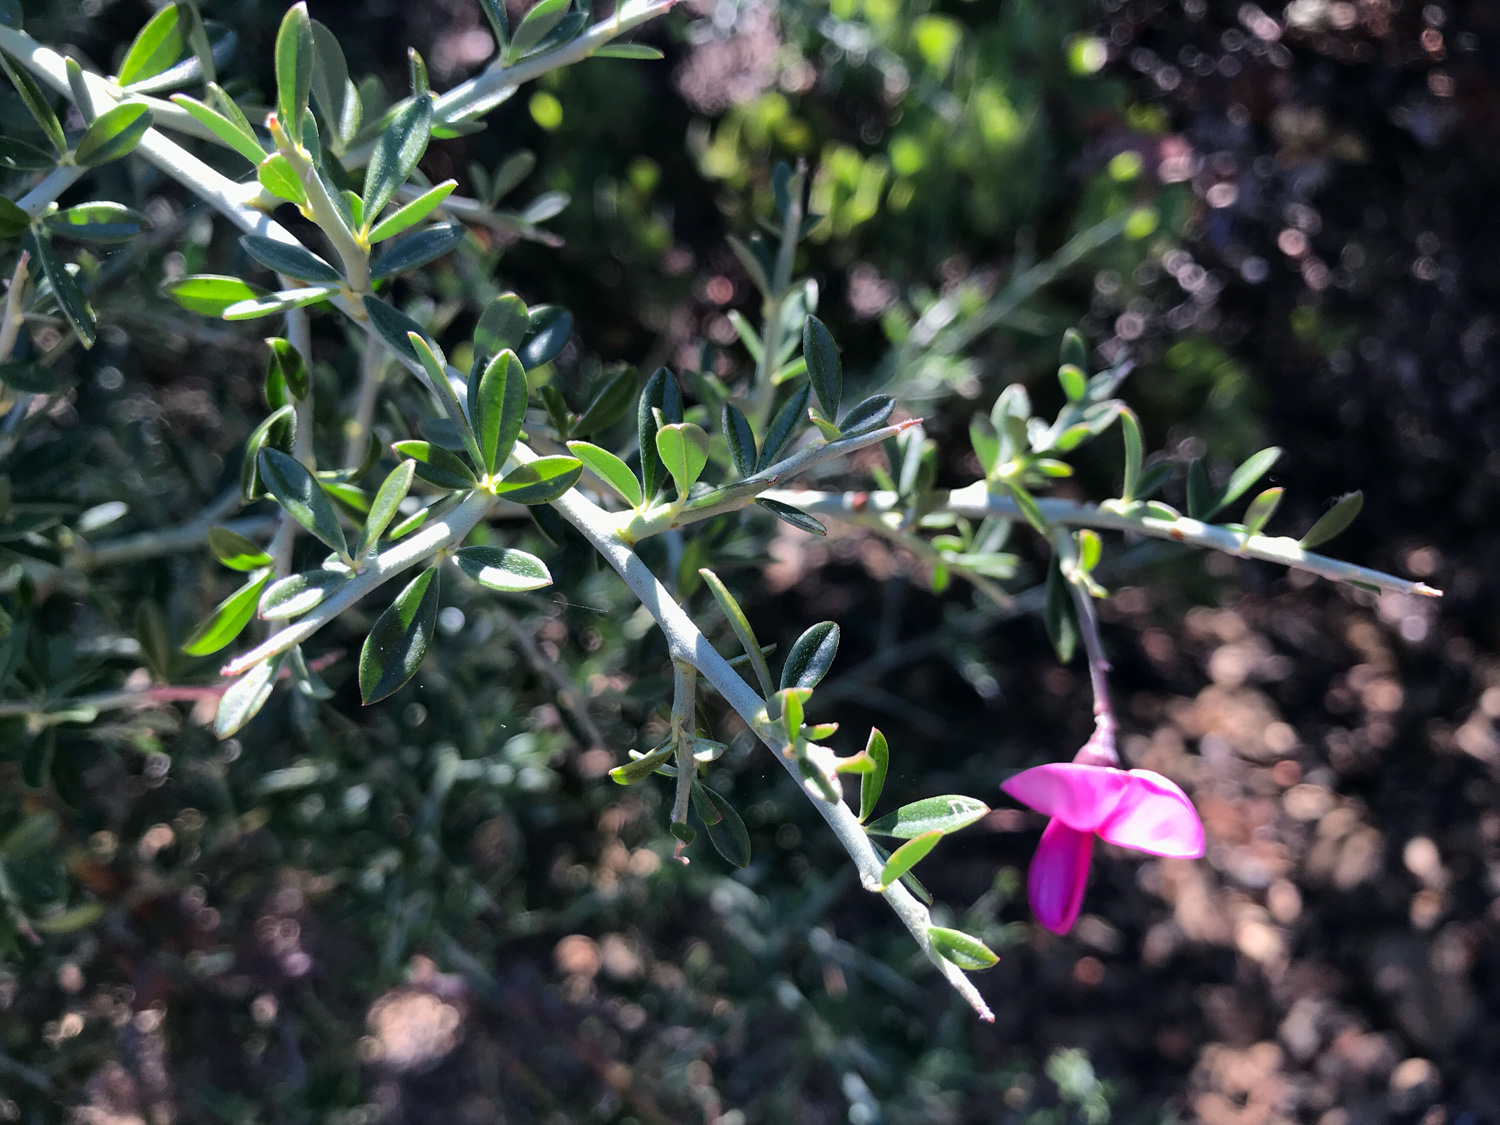 Chaparral Pea (Pickeringia montana)